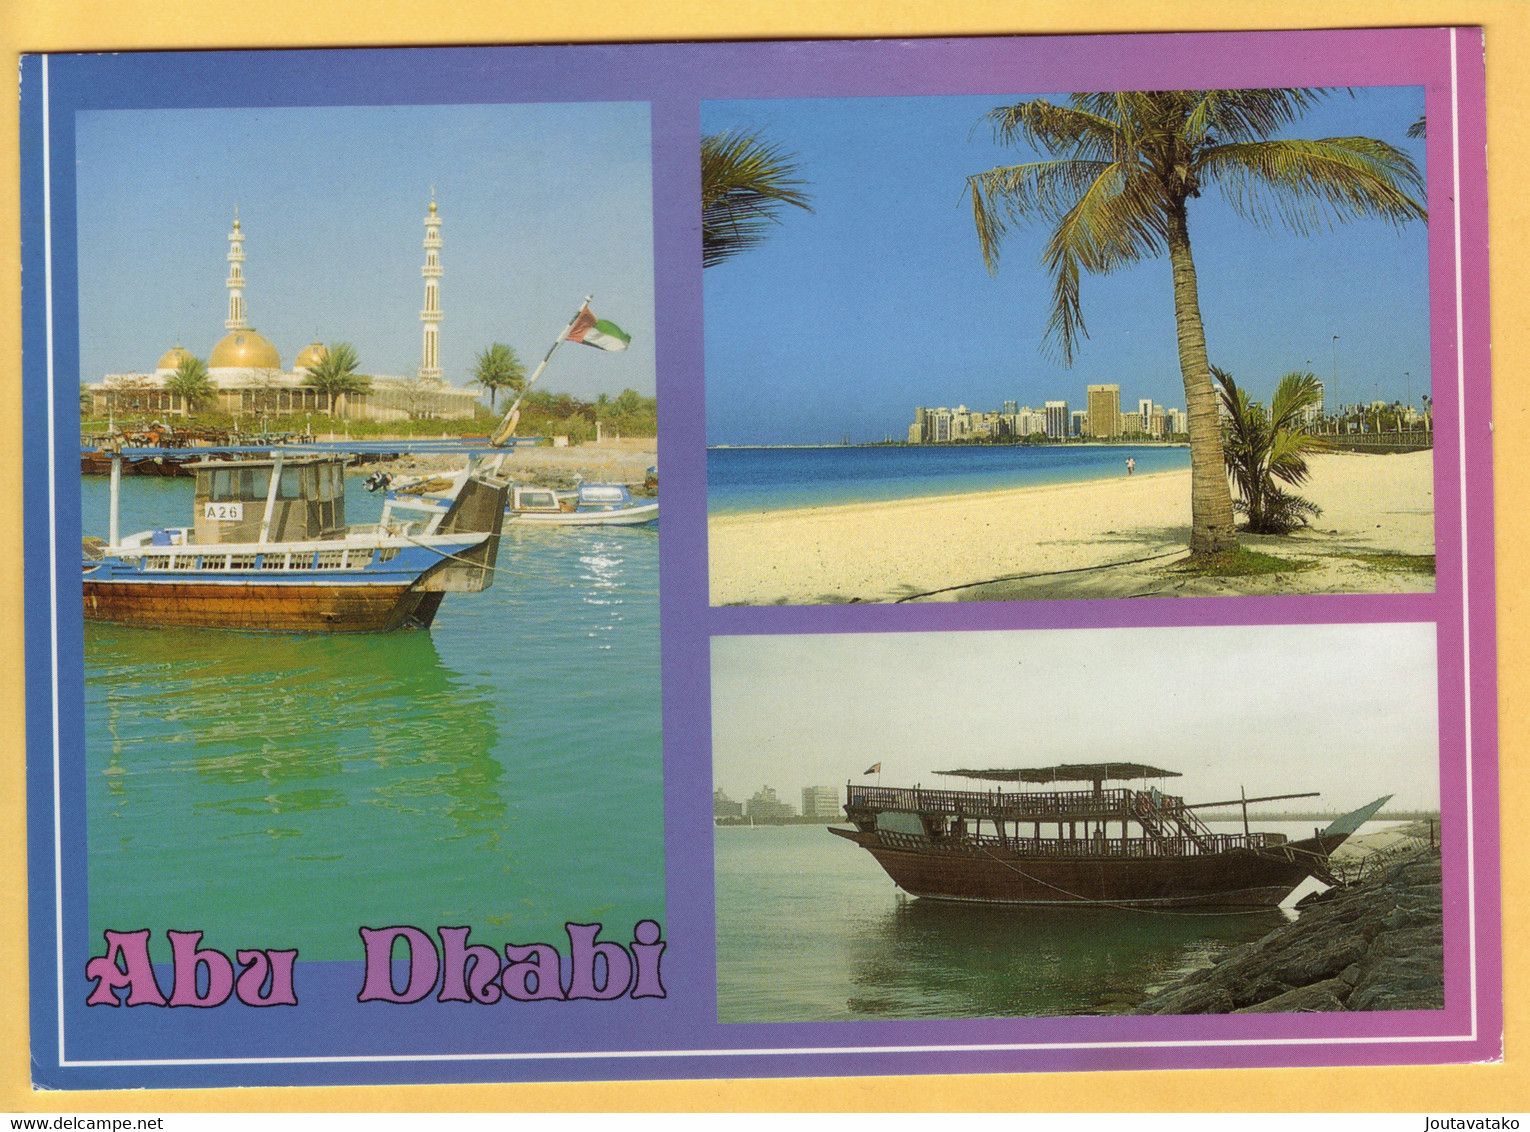 Abu Dhabi, United Arab Emirates/UAE/U.A.E. - Posted 1997 30th Accession Day Of Sheikh Zaied Bin Sultan Al-Nahyan Stamp - United Arab Emirates